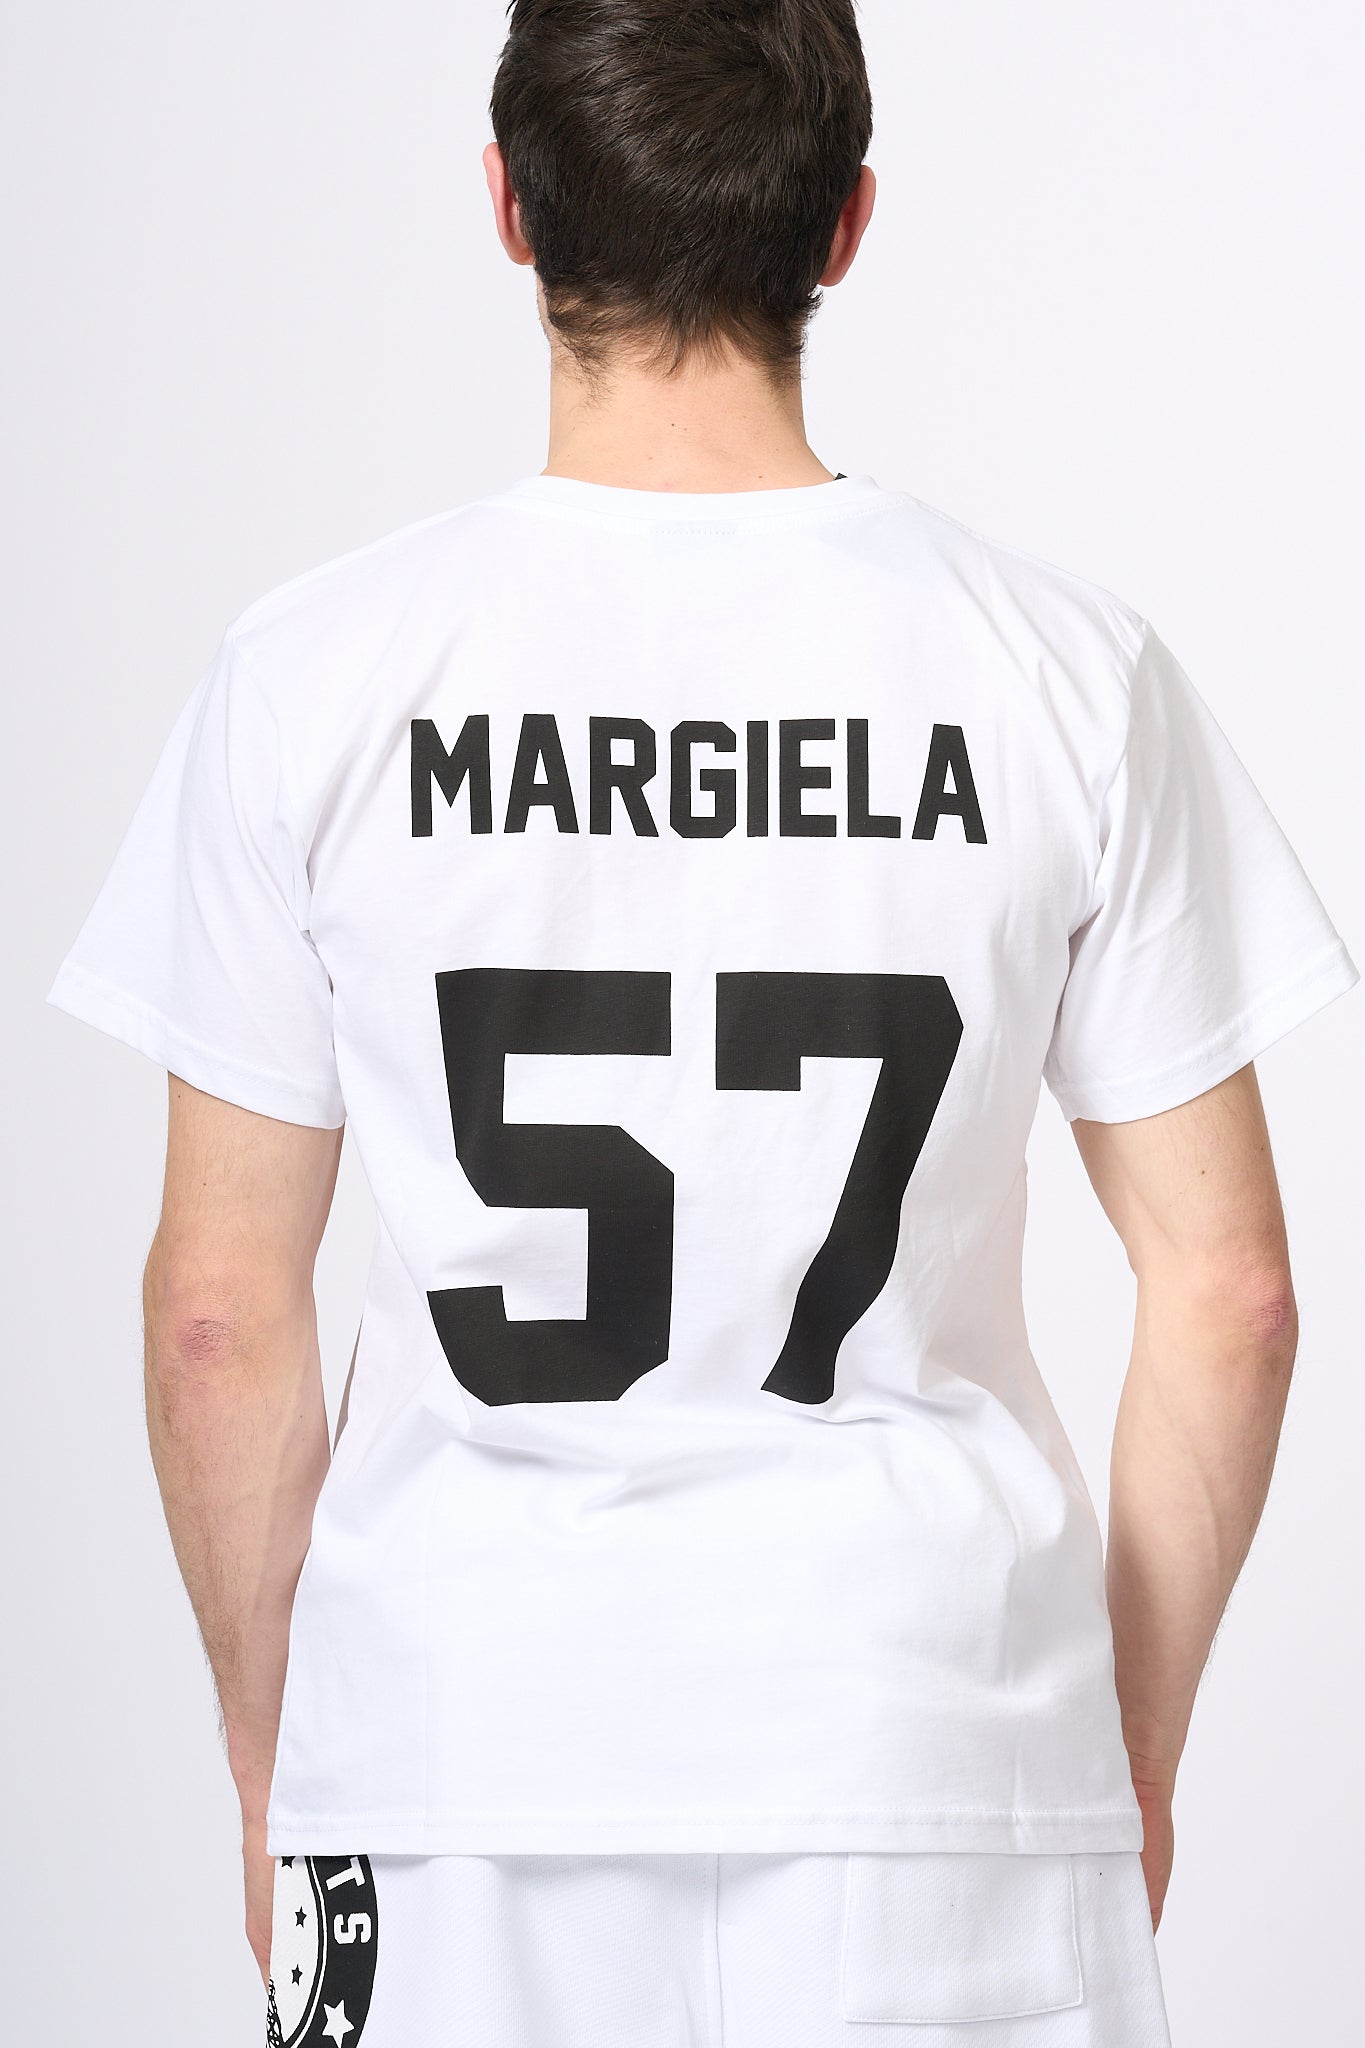 Les Artists T-shirt Margiela 57 Bianco Unisex-4